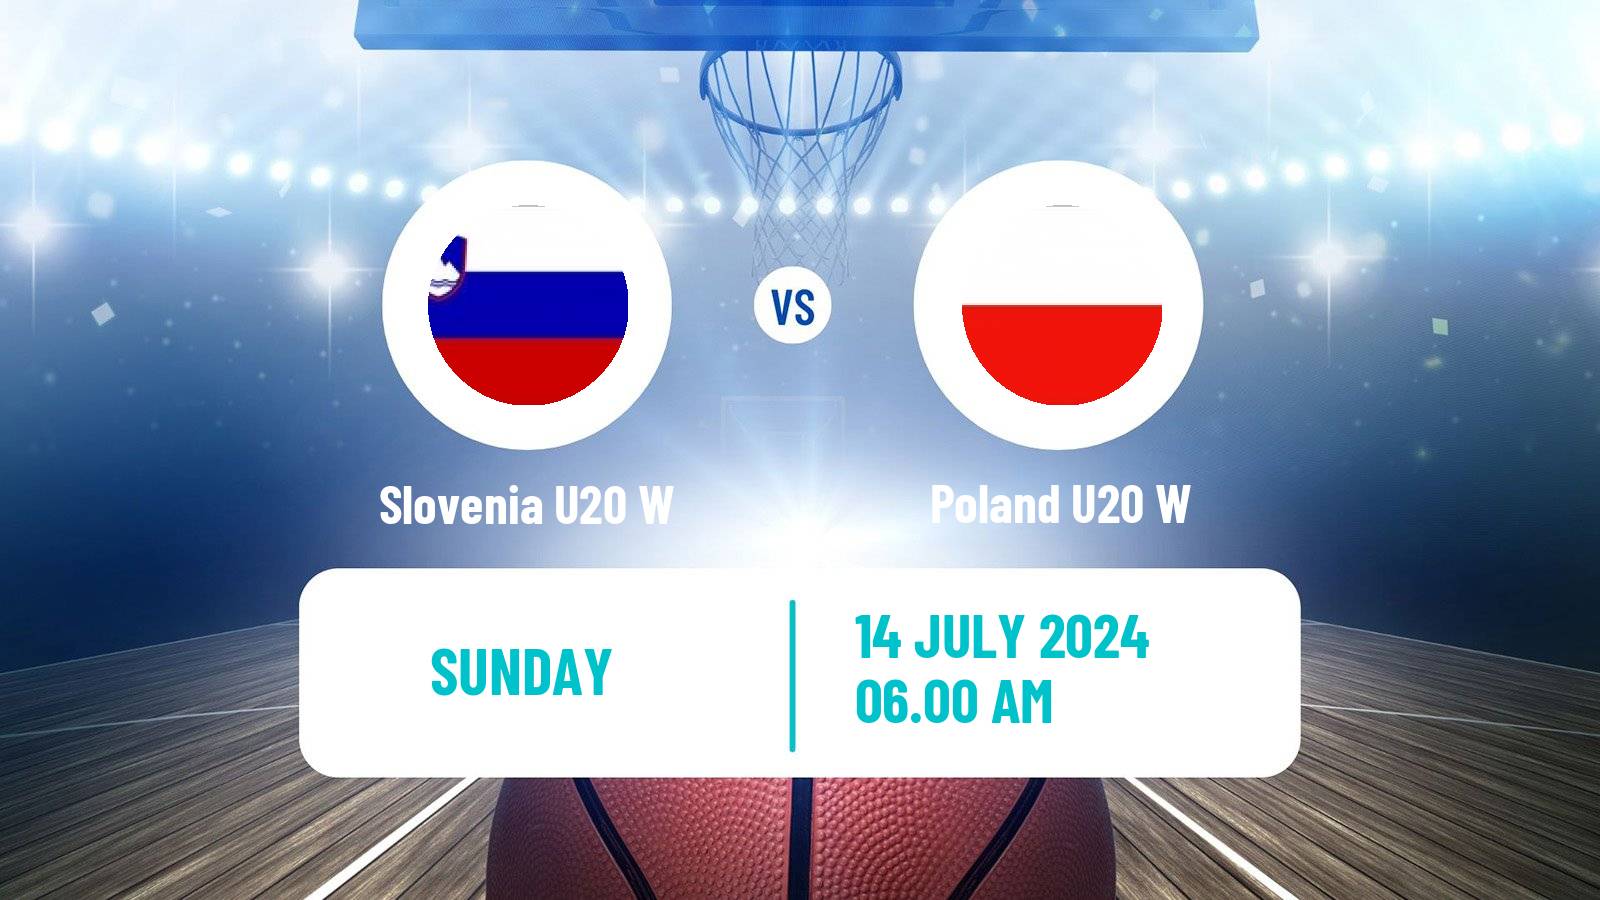 Basketball European Championship U20 Basketball Women Slovenia U20 W - Poland U20 W